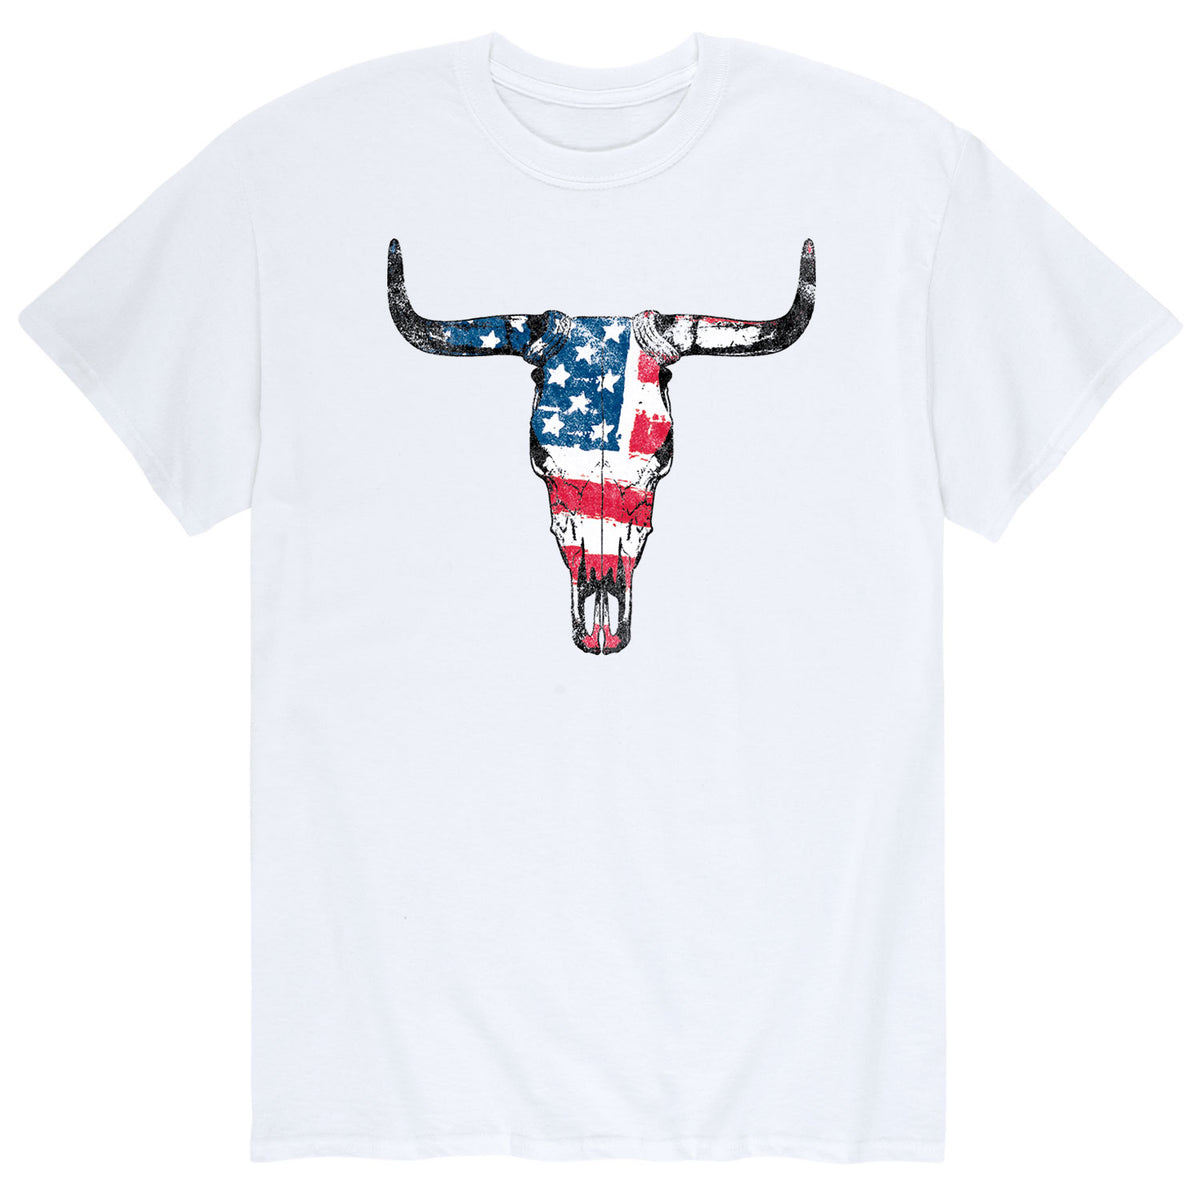 Scully 67 unisex T shirt - Freedomdesign